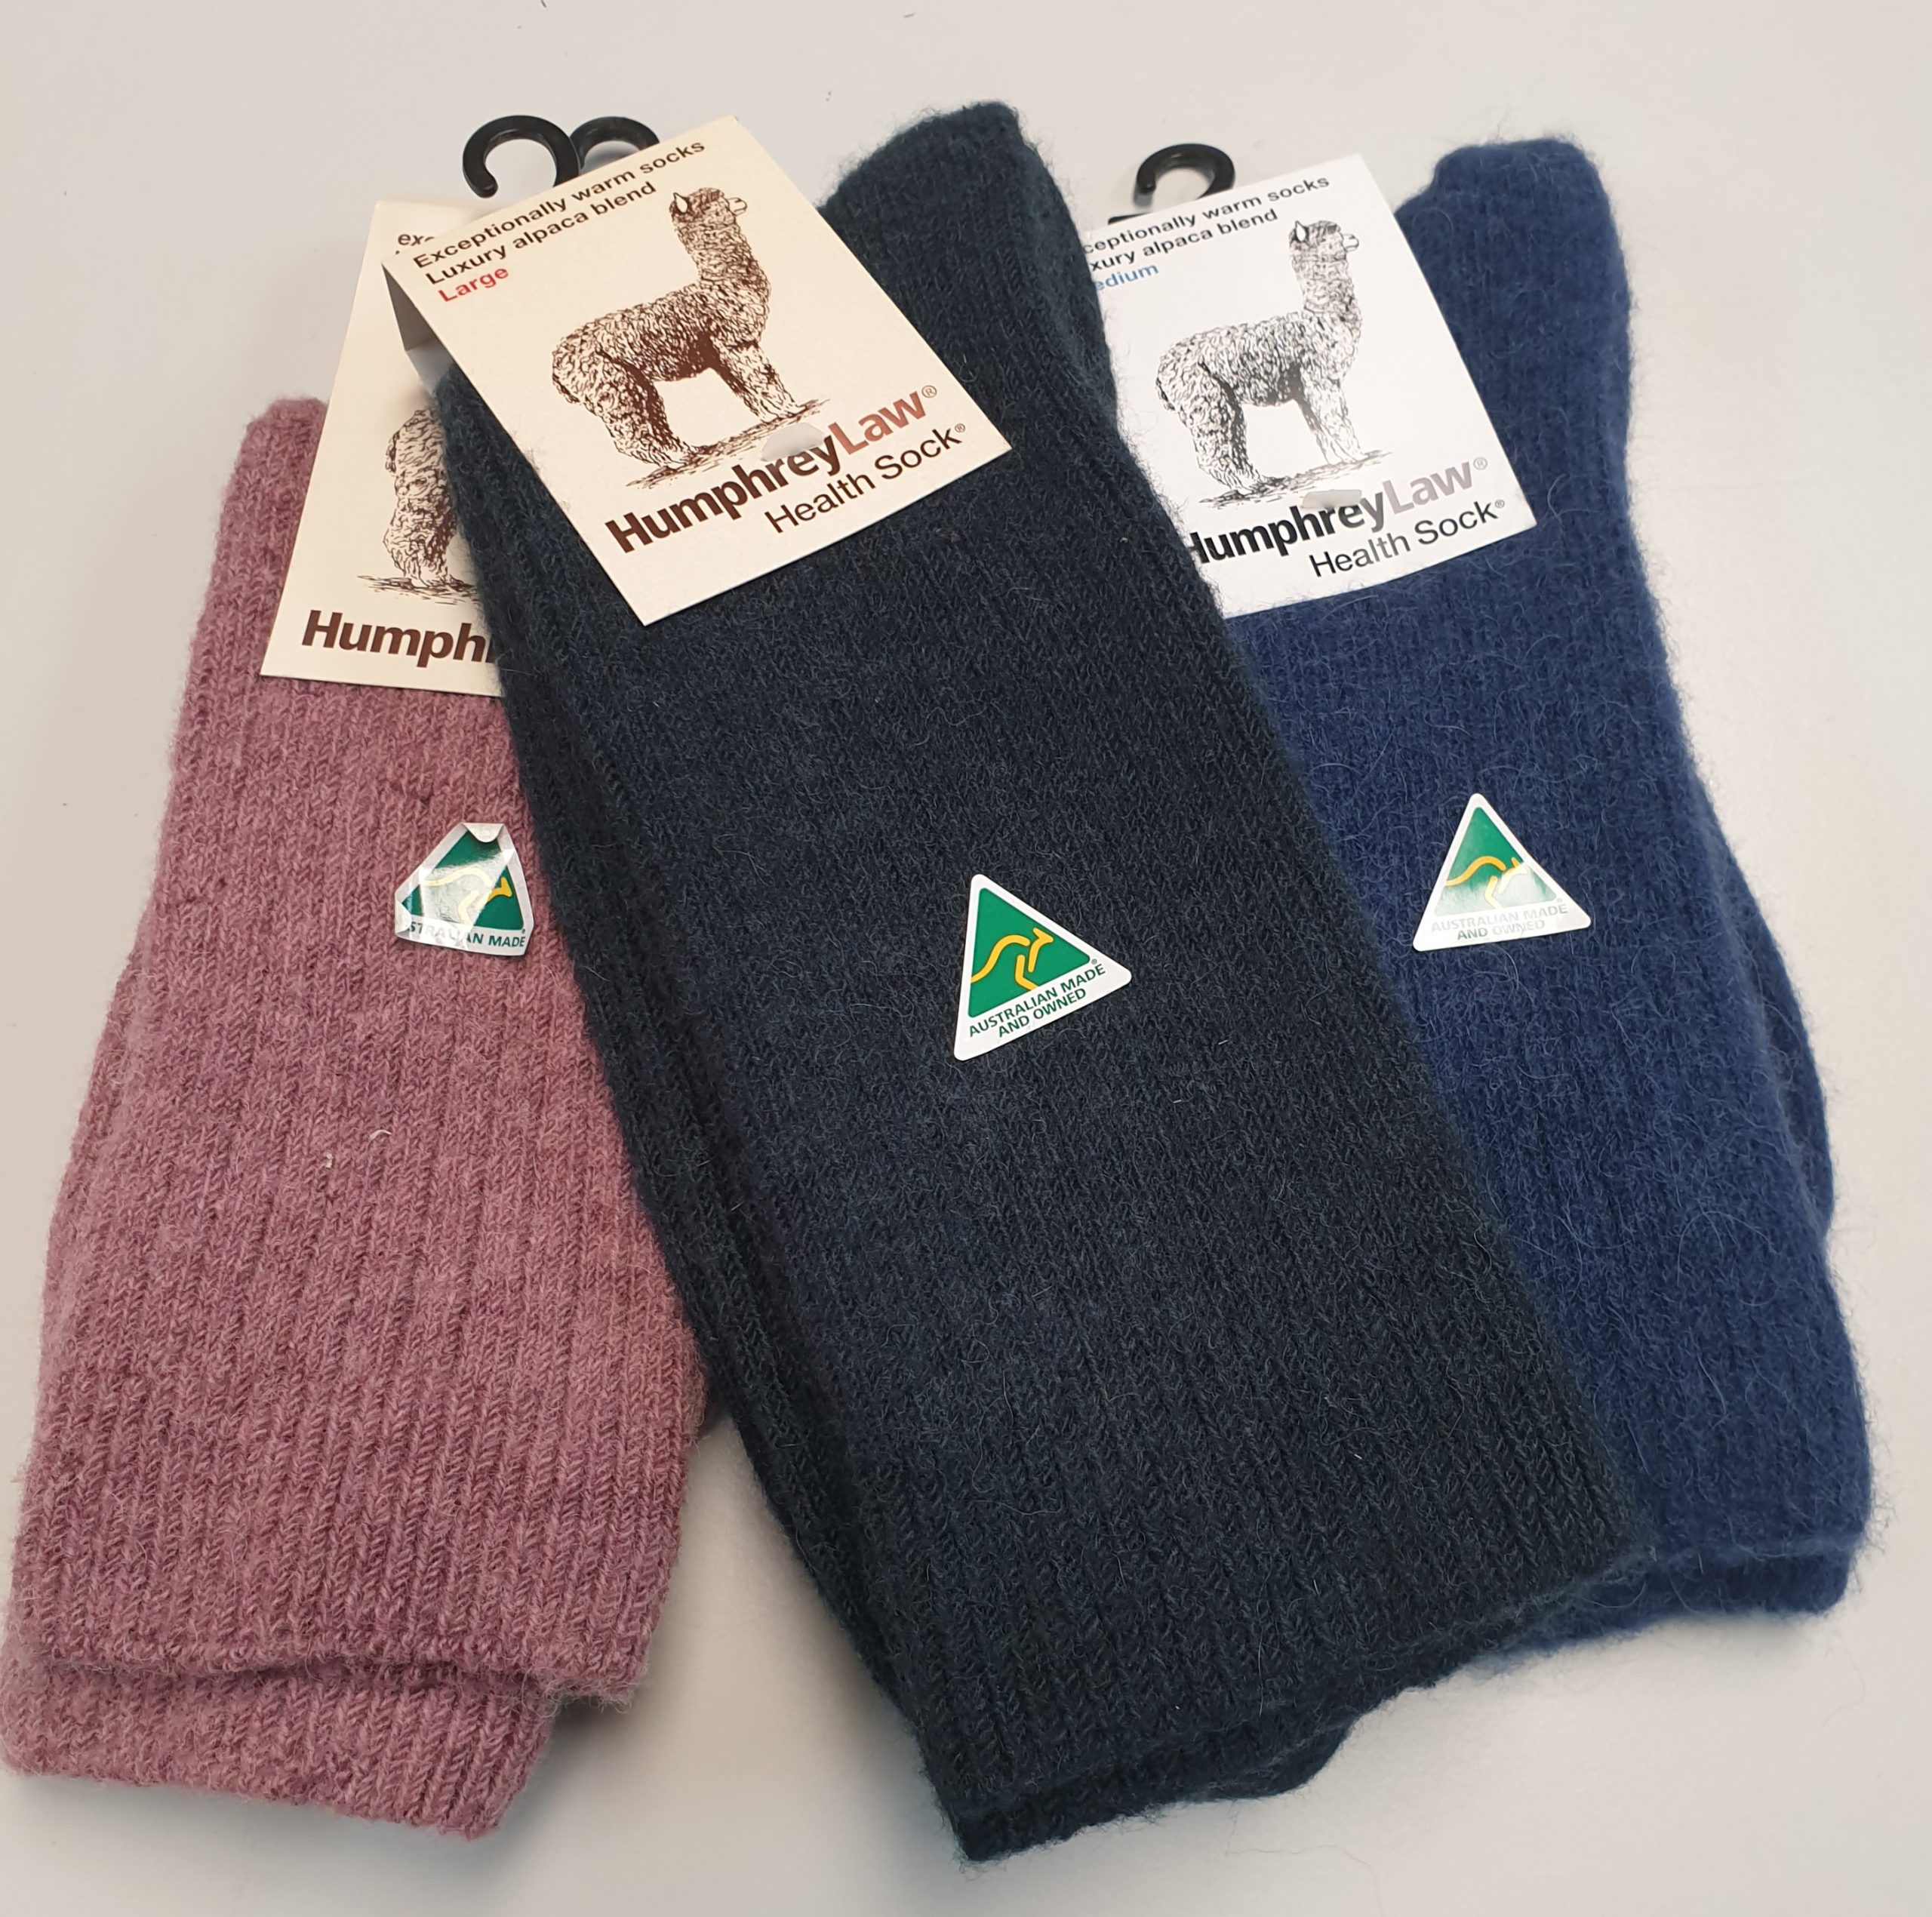 Alpaca Socks  Shop for the Warmest, Softest Socks Available